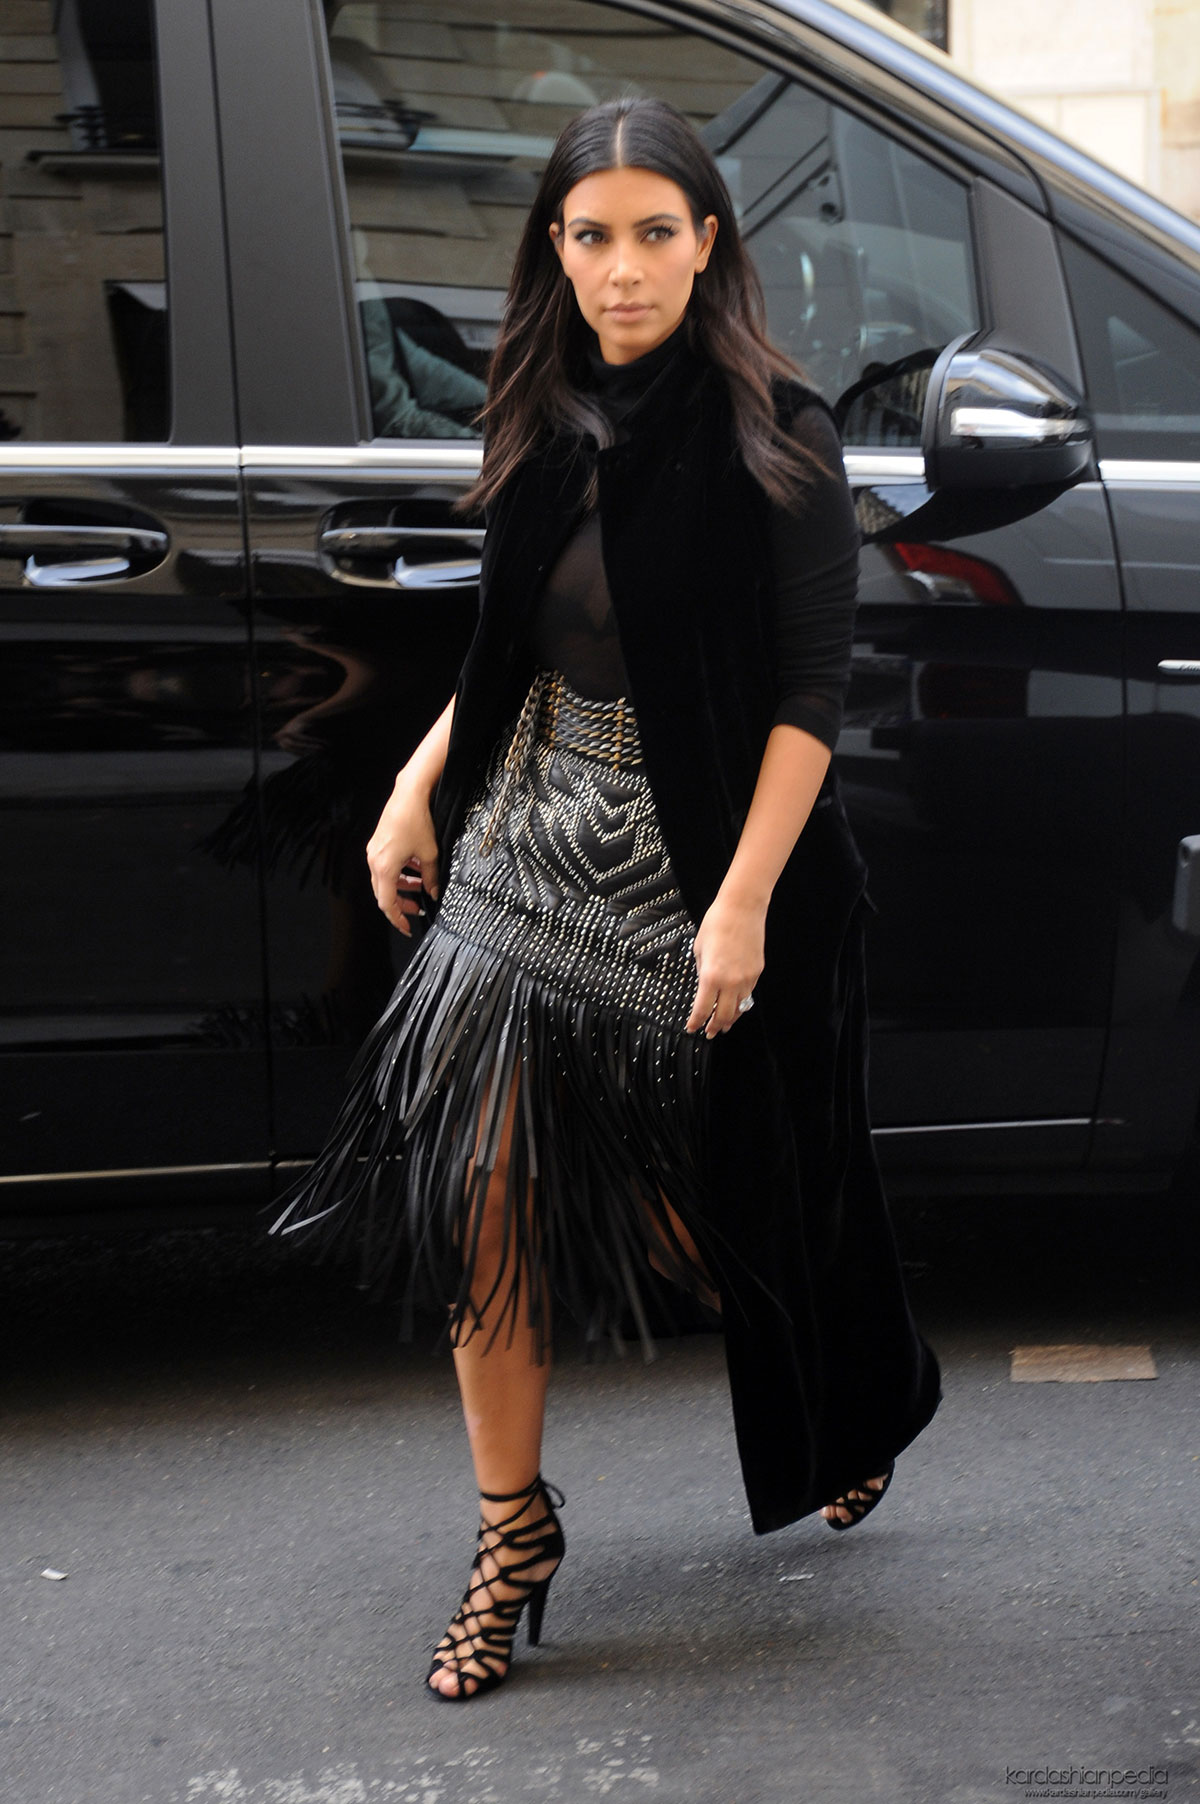 Kim Kardashian was seen shopping in Paris